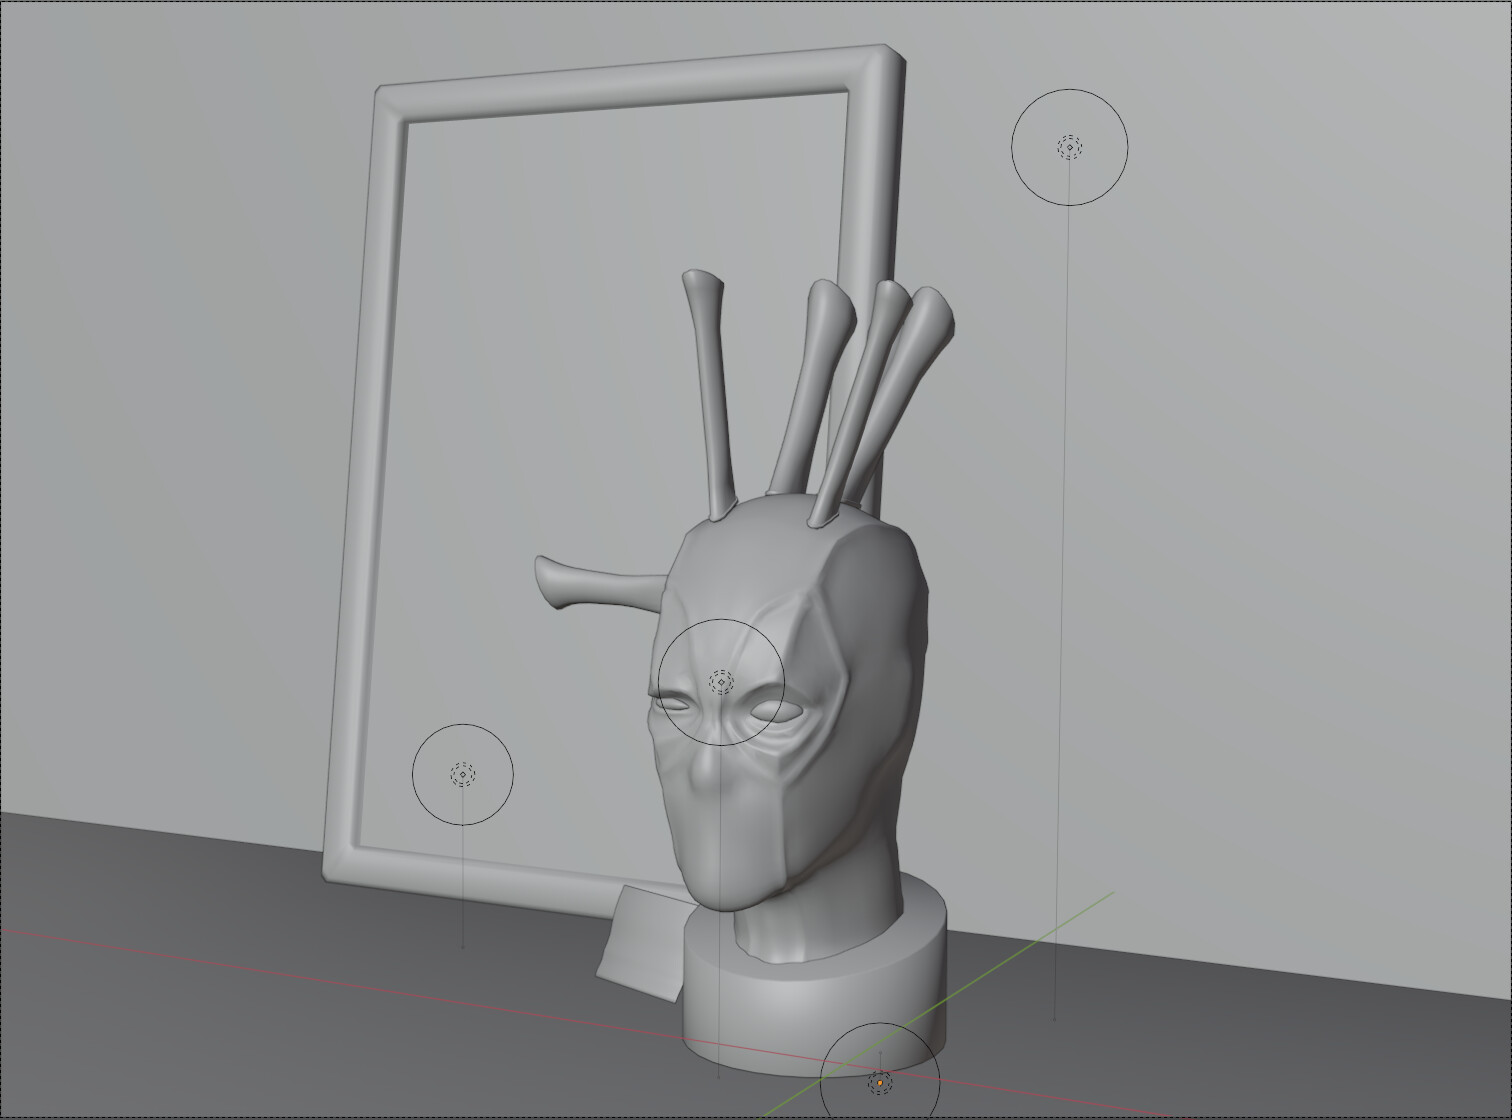 3D Printed Deadpool Knife Block for Marvel Fans - Cooking Gizmos